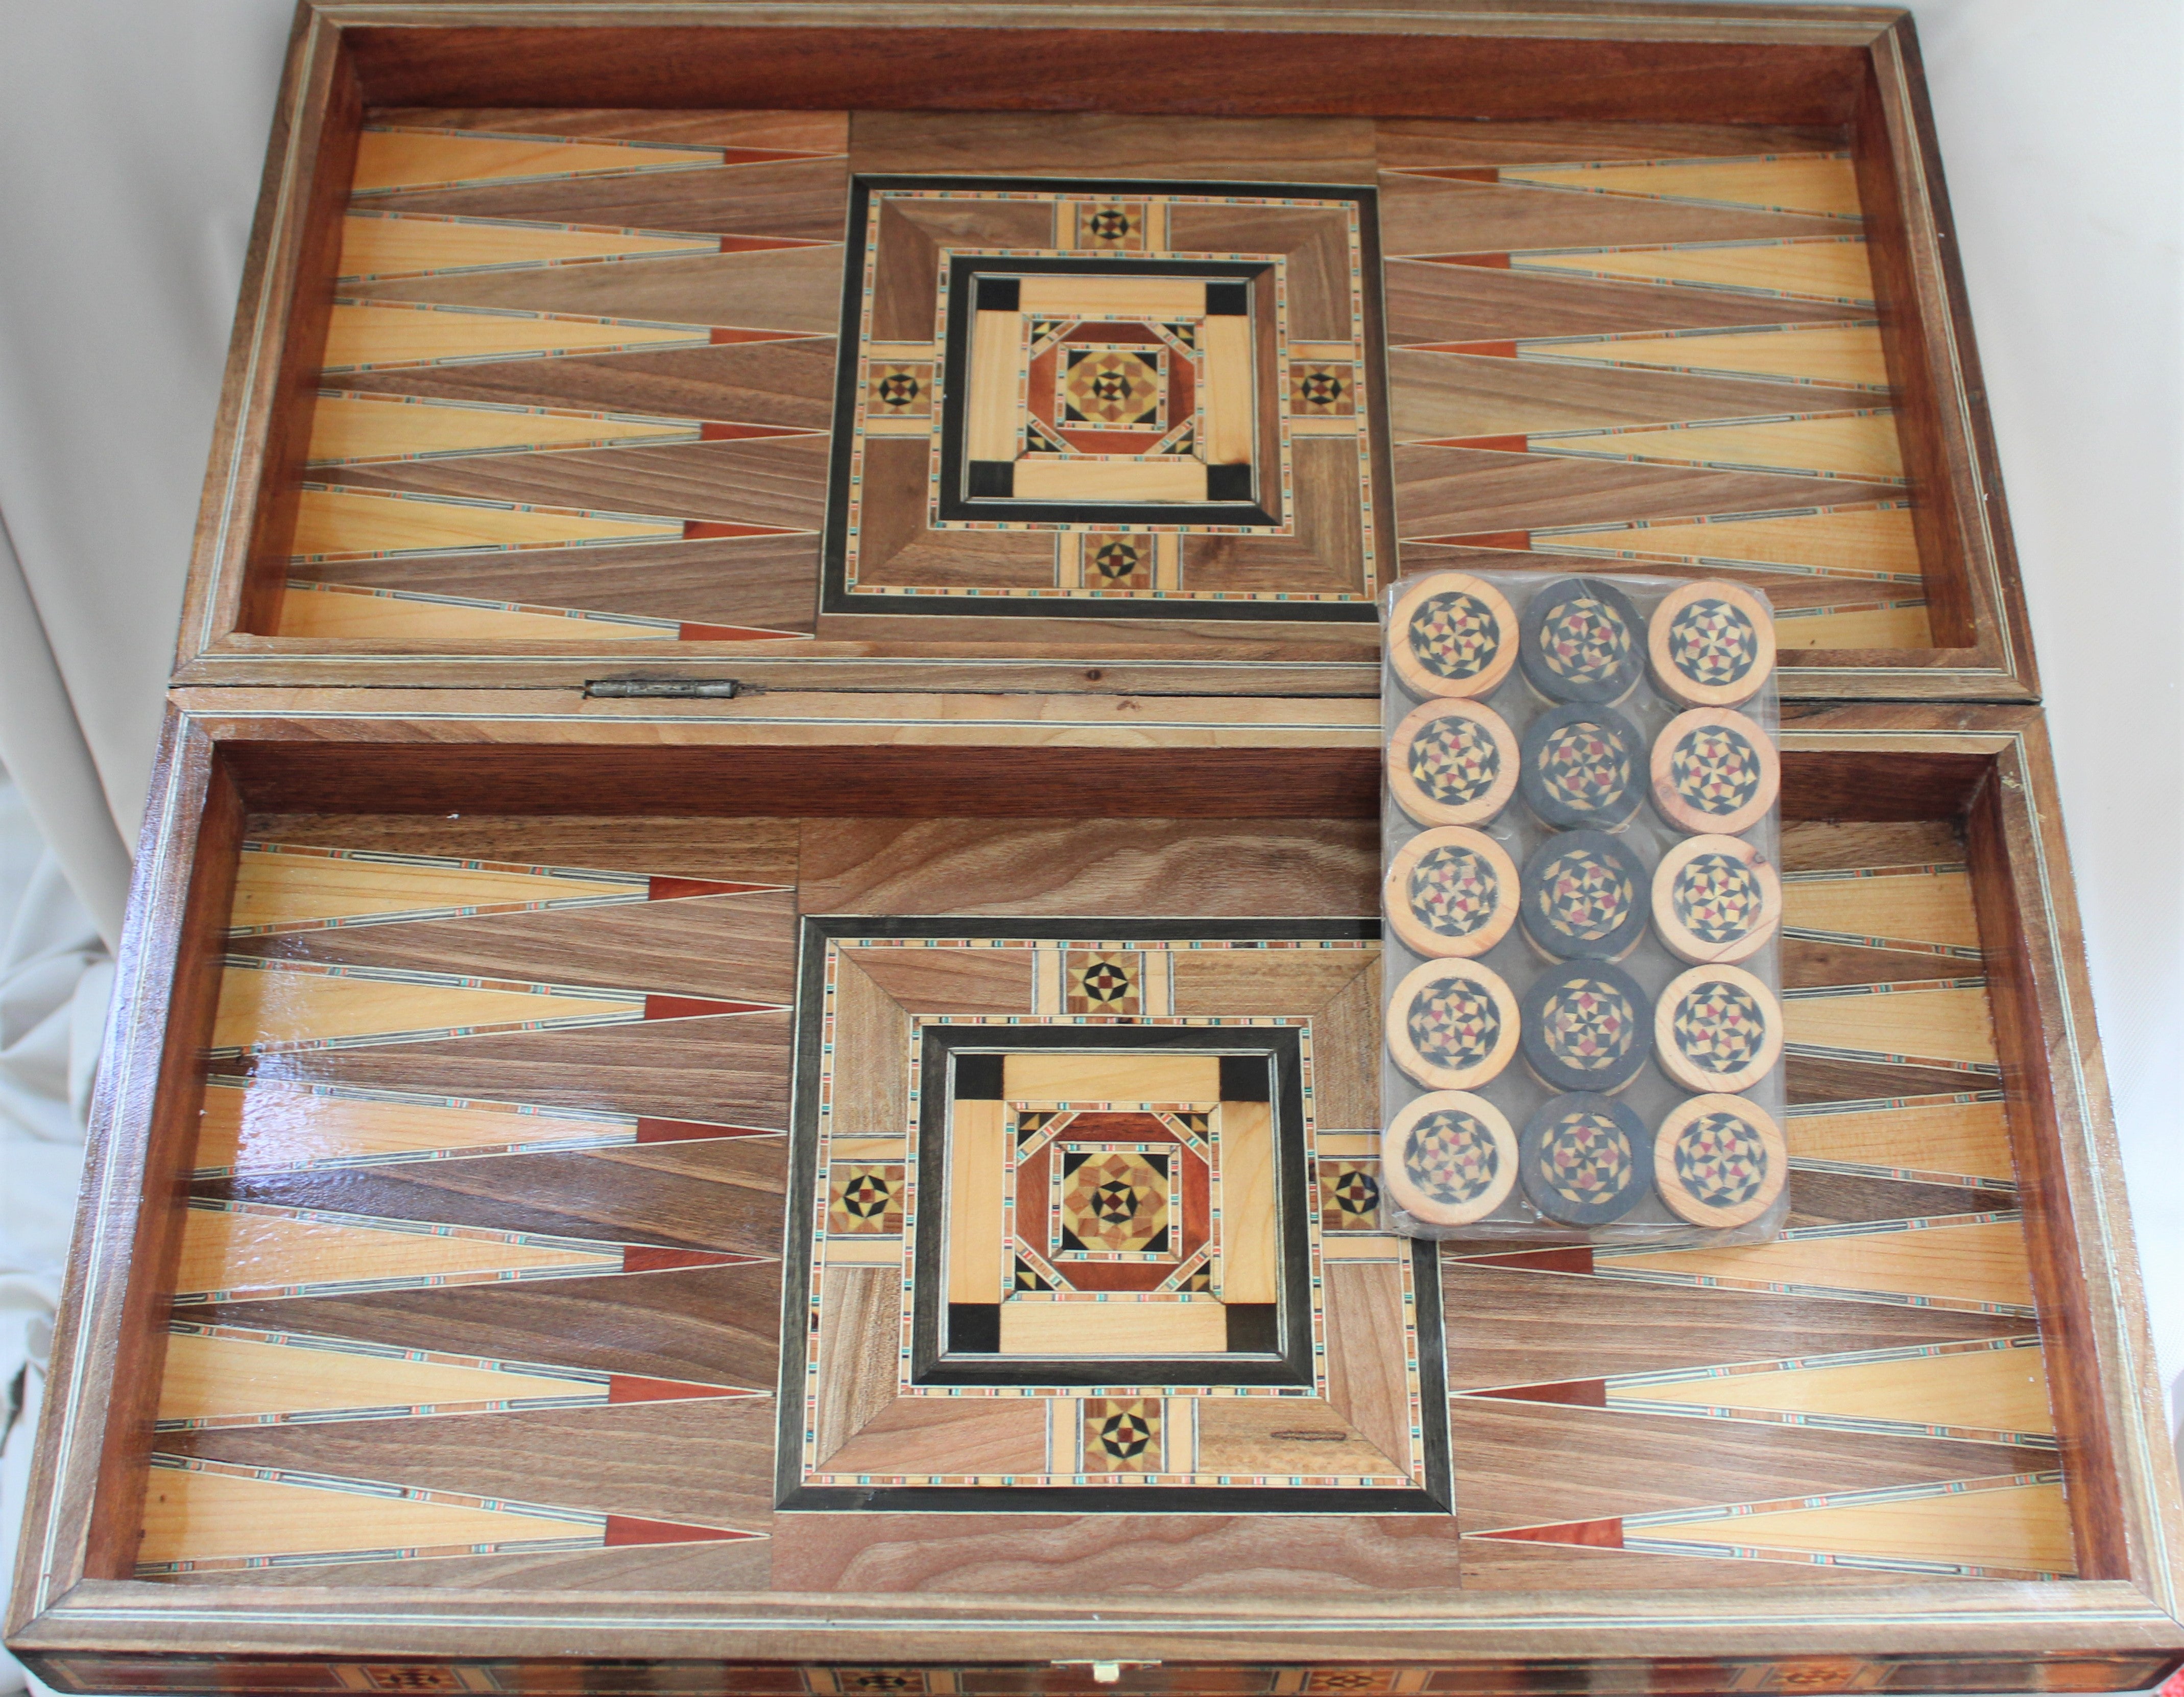 Takkat Syrian Mosaic Backgammon & Chess Board